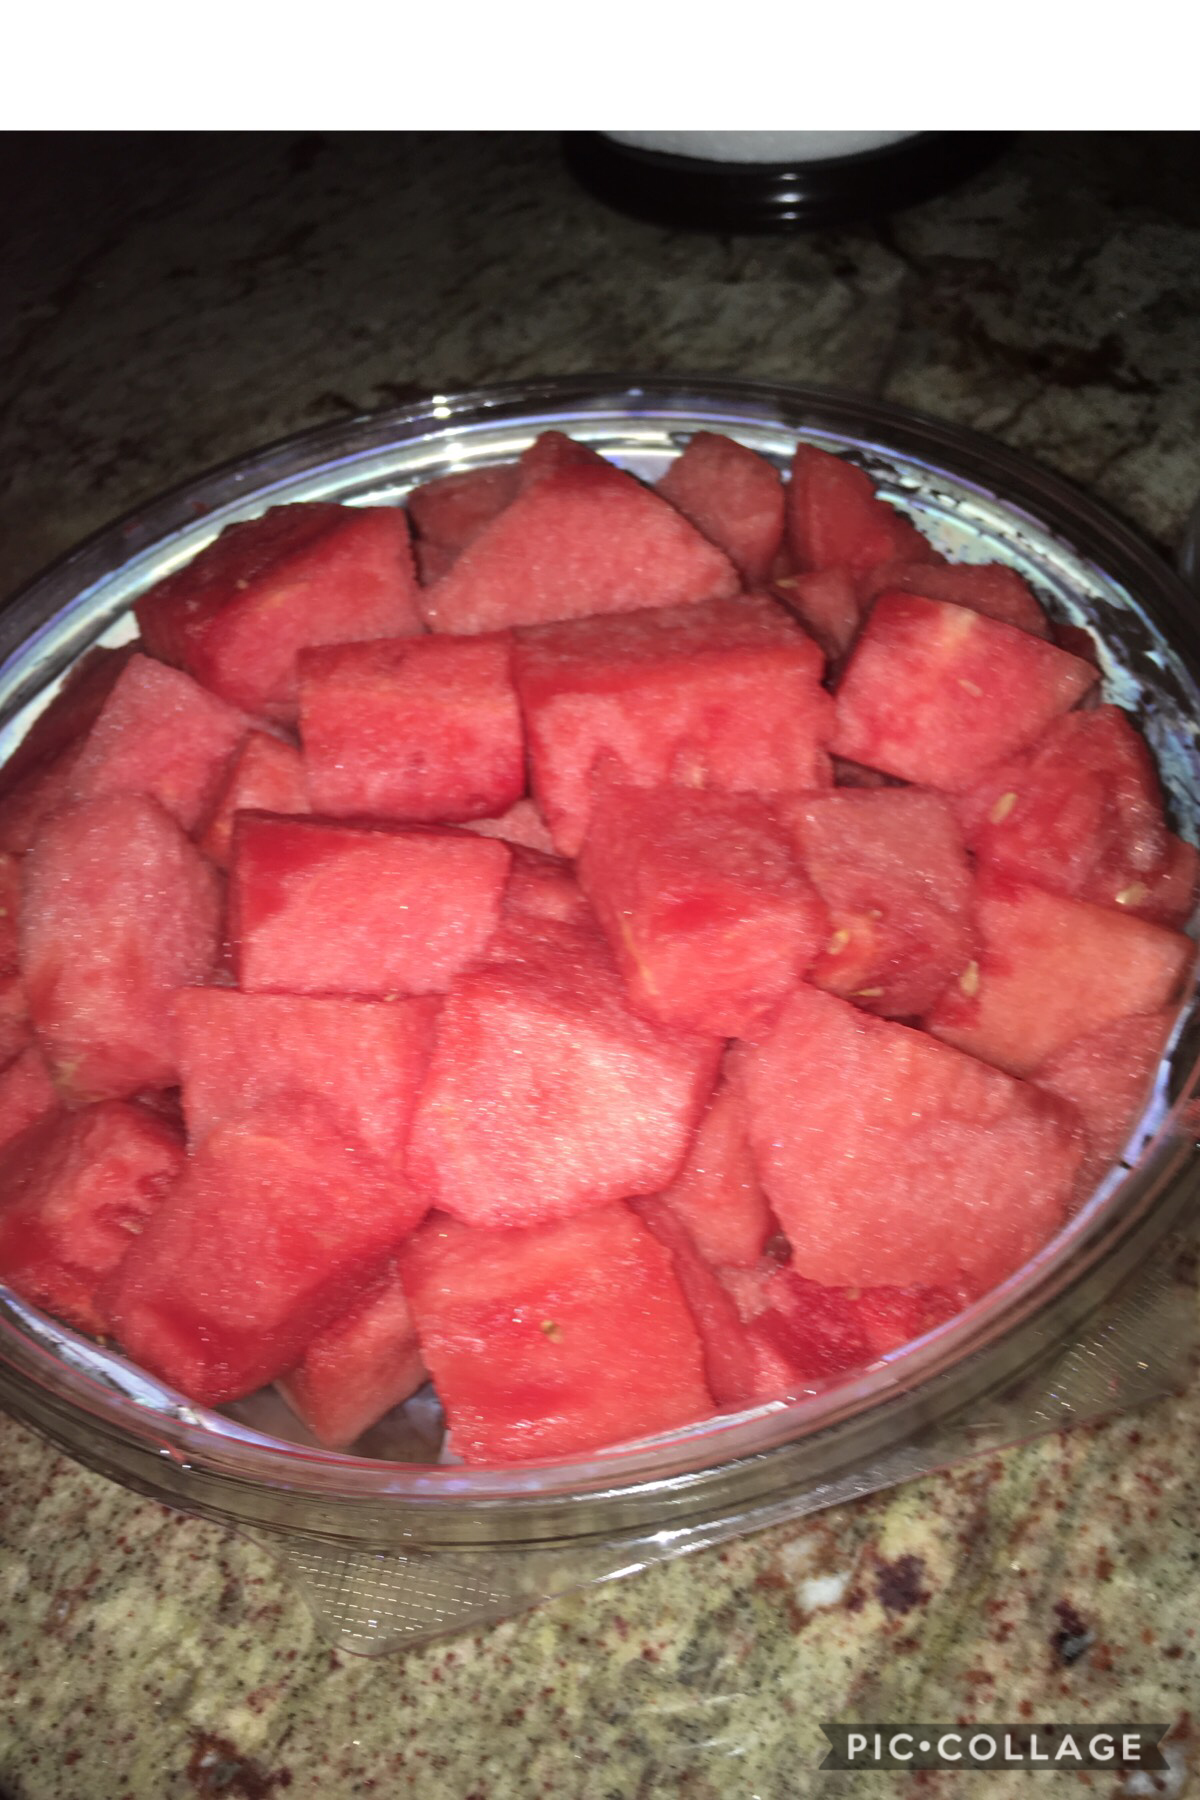 I love watermelon!!!❤️❤️